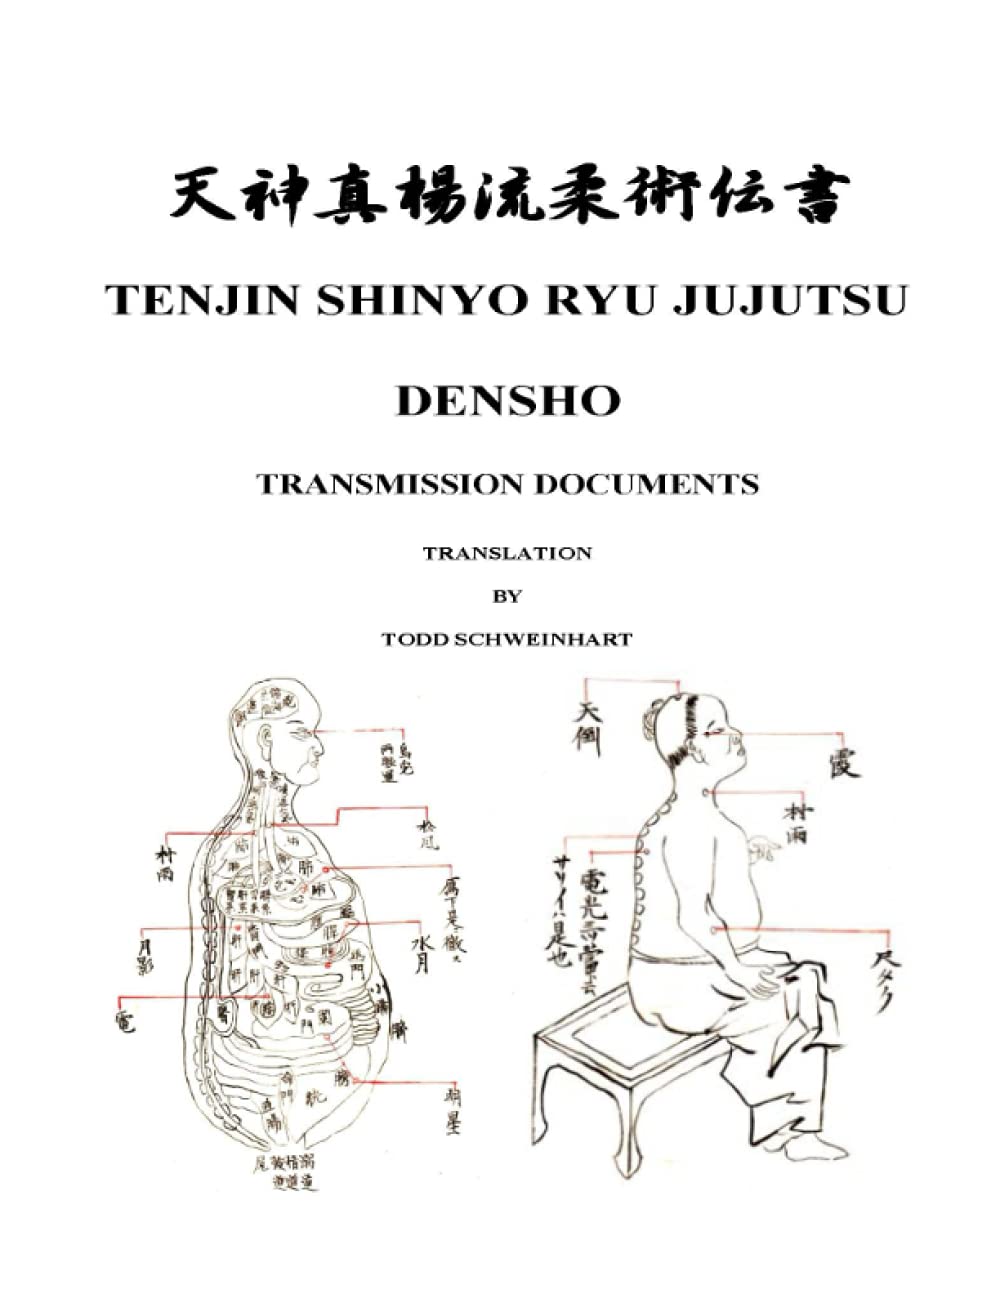 Tenjin Shinyo Ryu Densho: Transmission Documents Book Translated by Todd Schweinhart